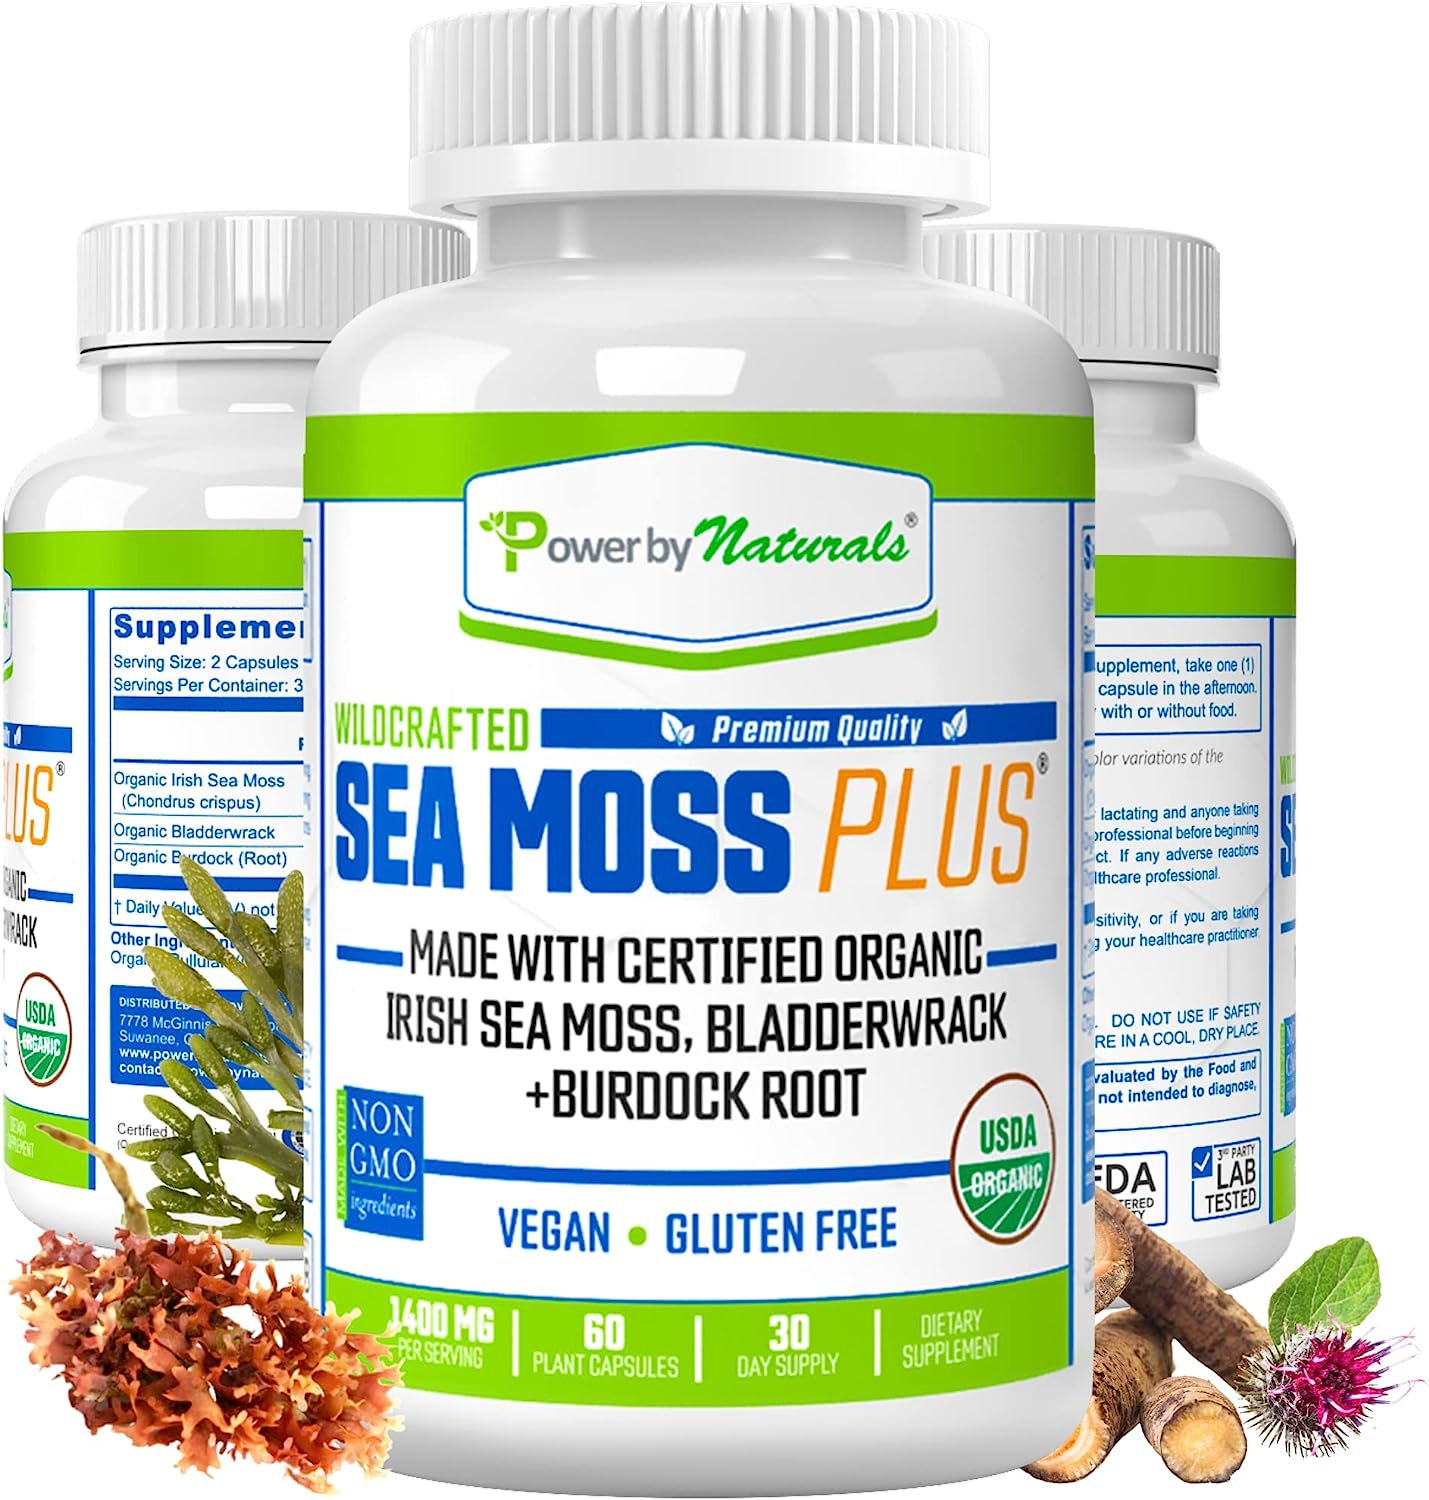 Sea Moss Musgo Marino Musgo Irlandés 100% Silvestre 227gr